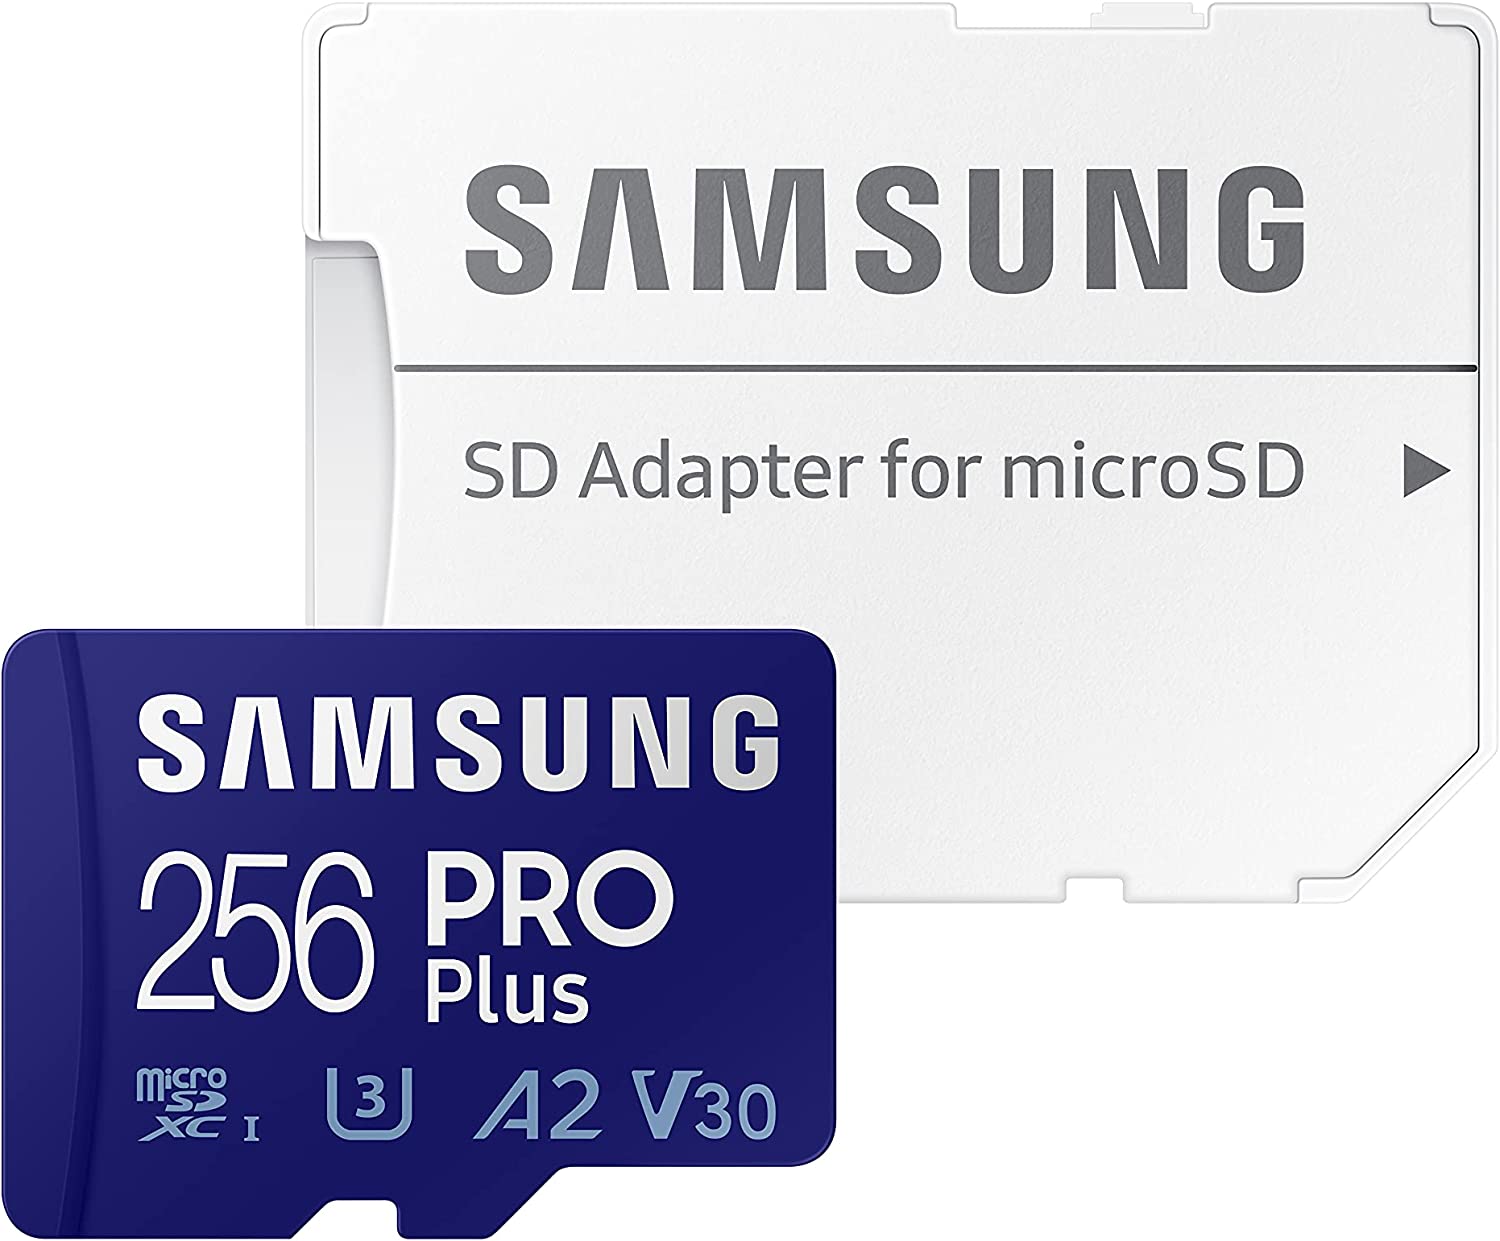 256GB Samsung Pro Plus UHS-1 U3 A2 V30 microSDXC Memory w/ Adapter $24.99 via Amazon